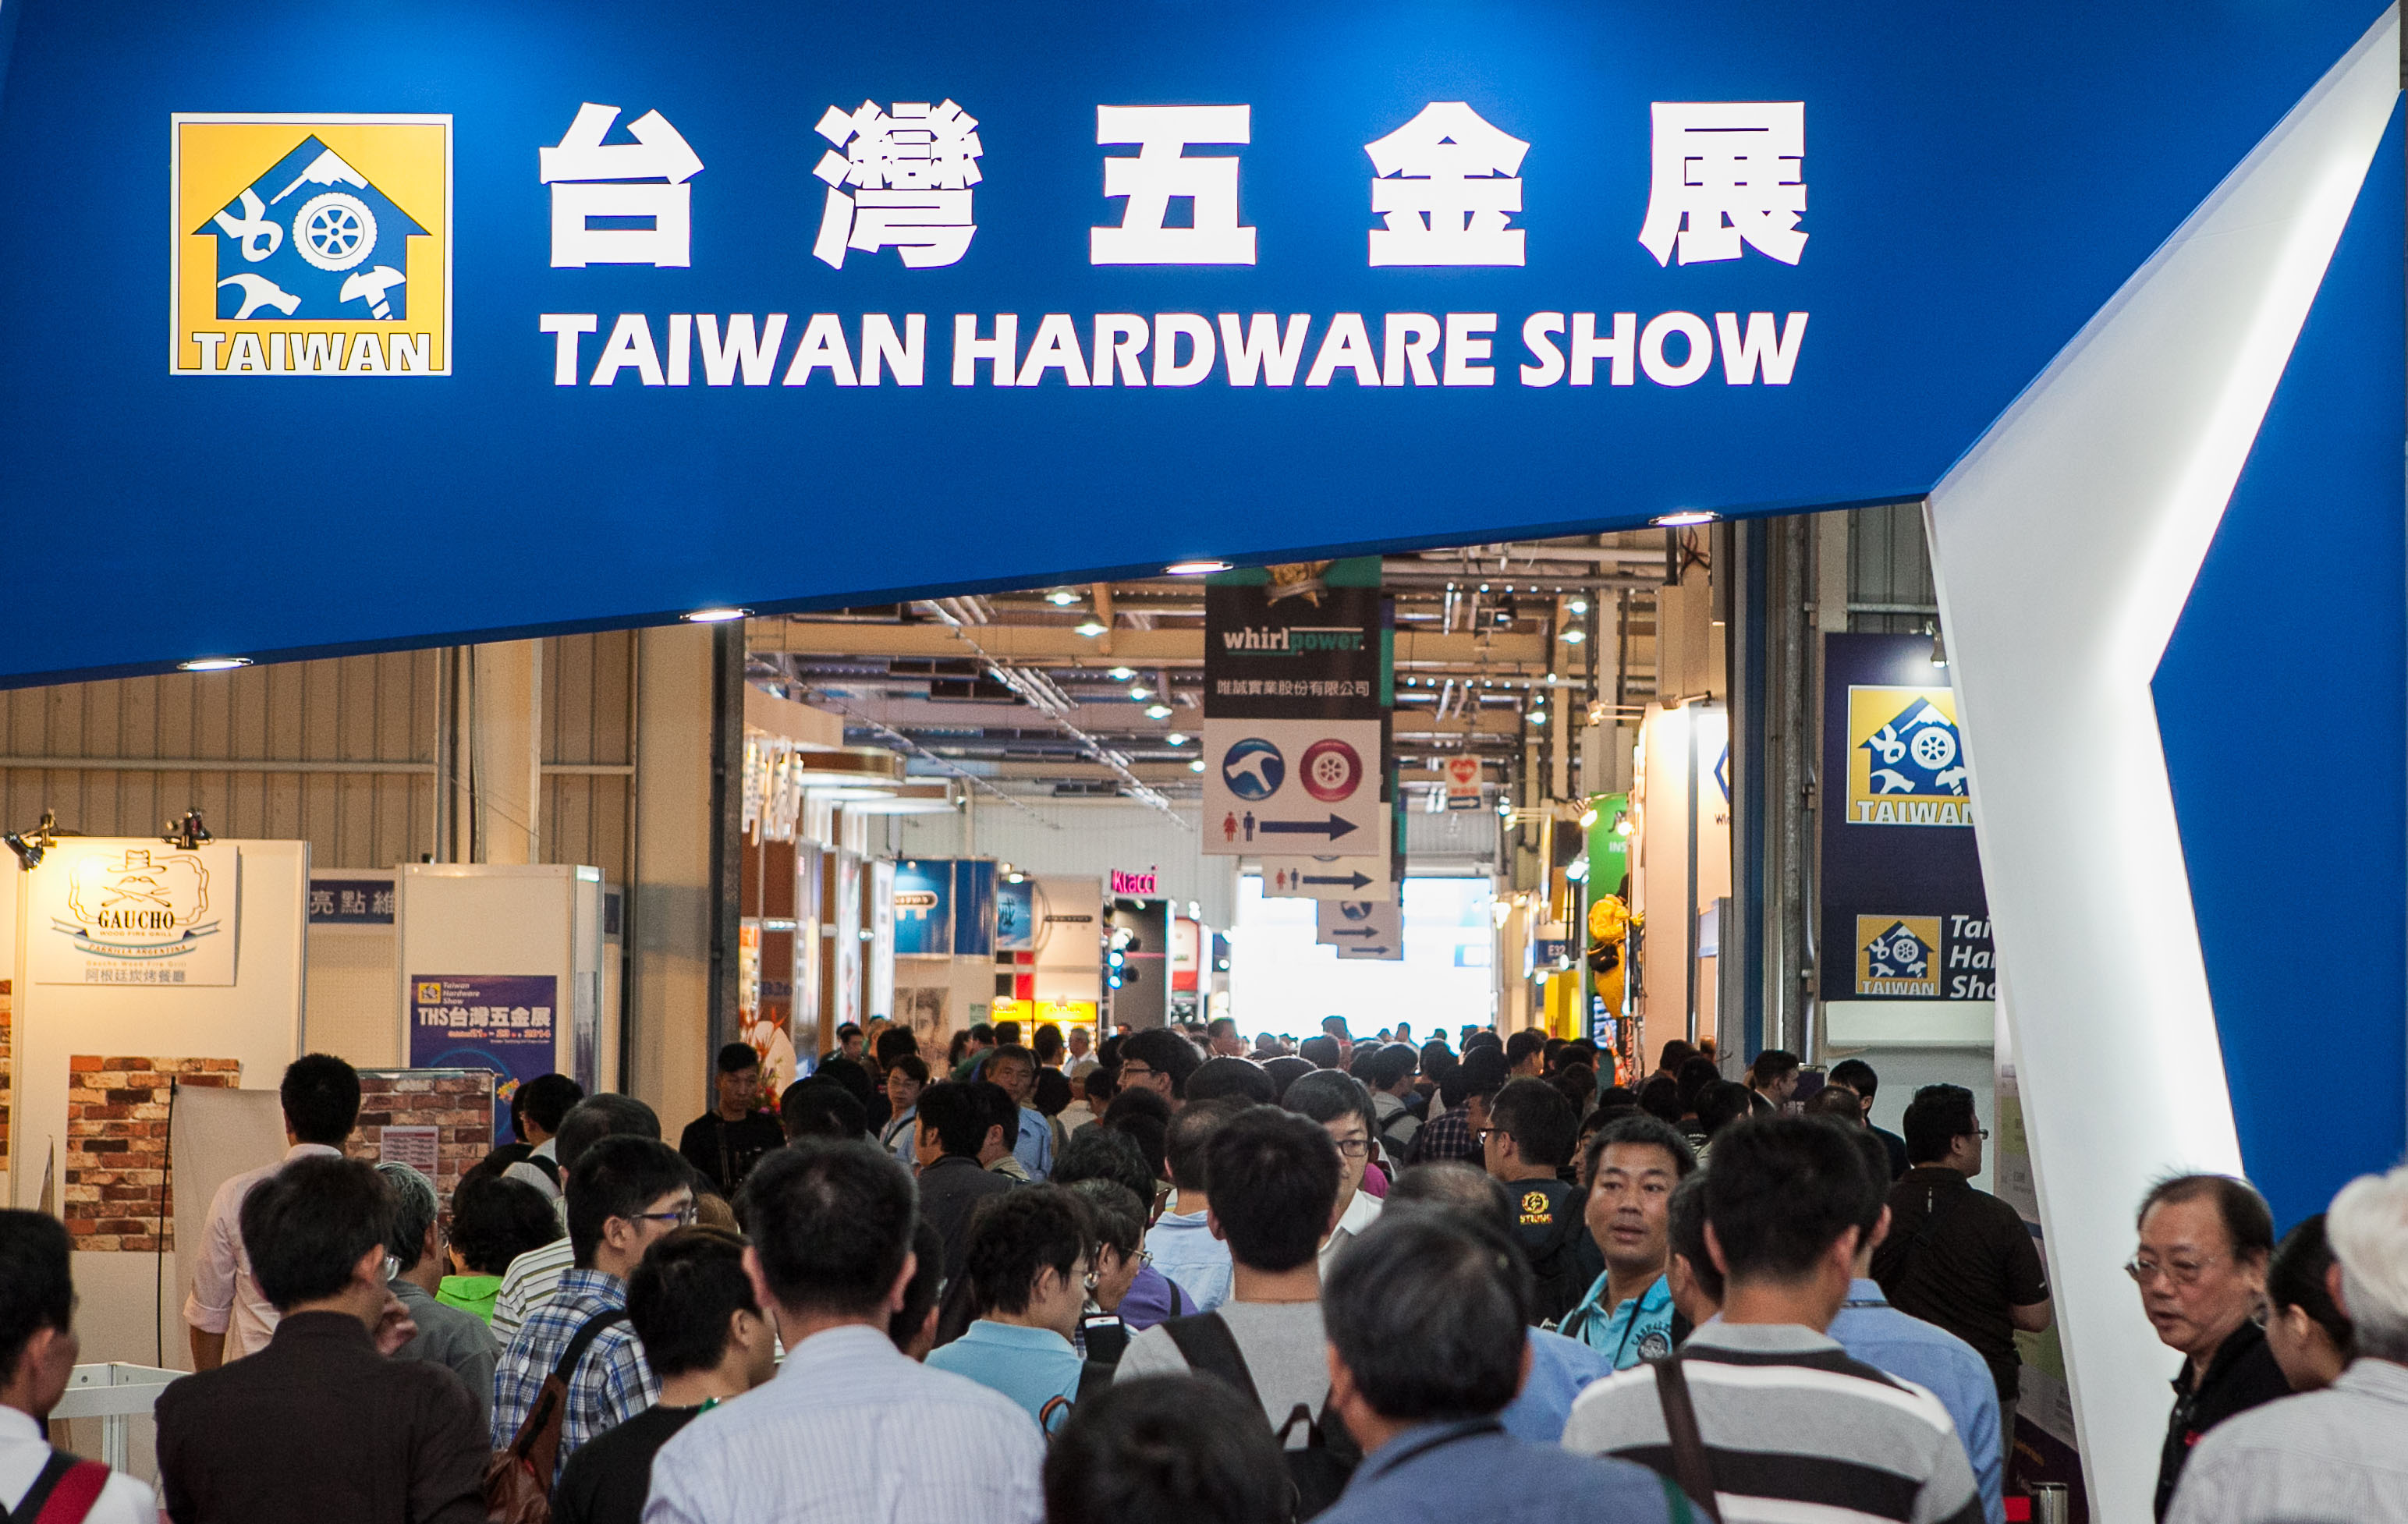 2018 Taiwan Hardware Show News on Taiwantrade